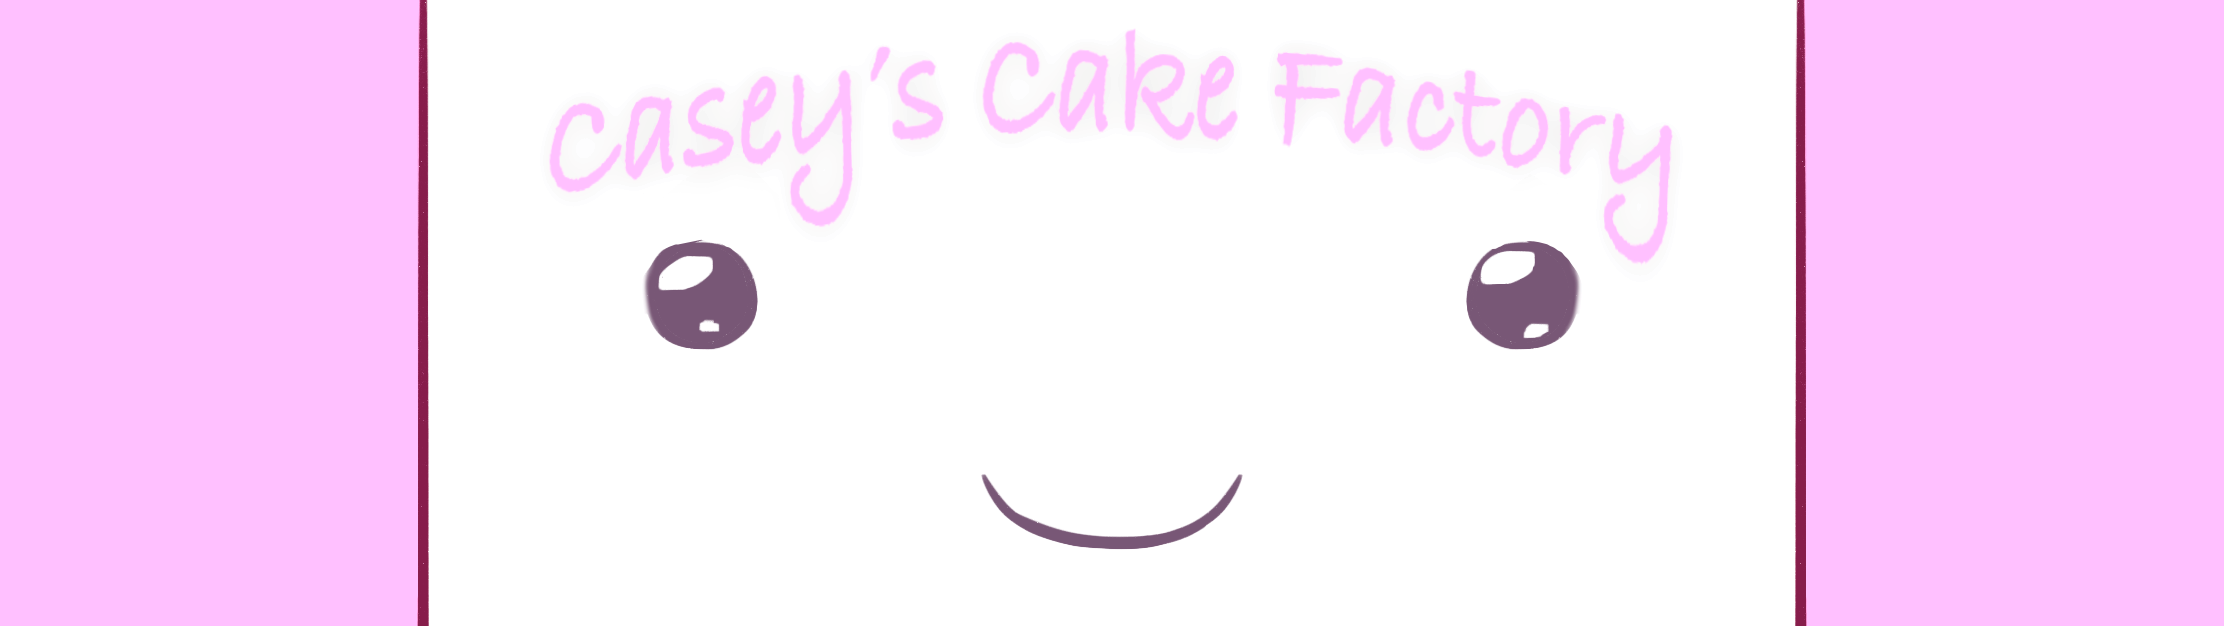 Casey's Cake Factory